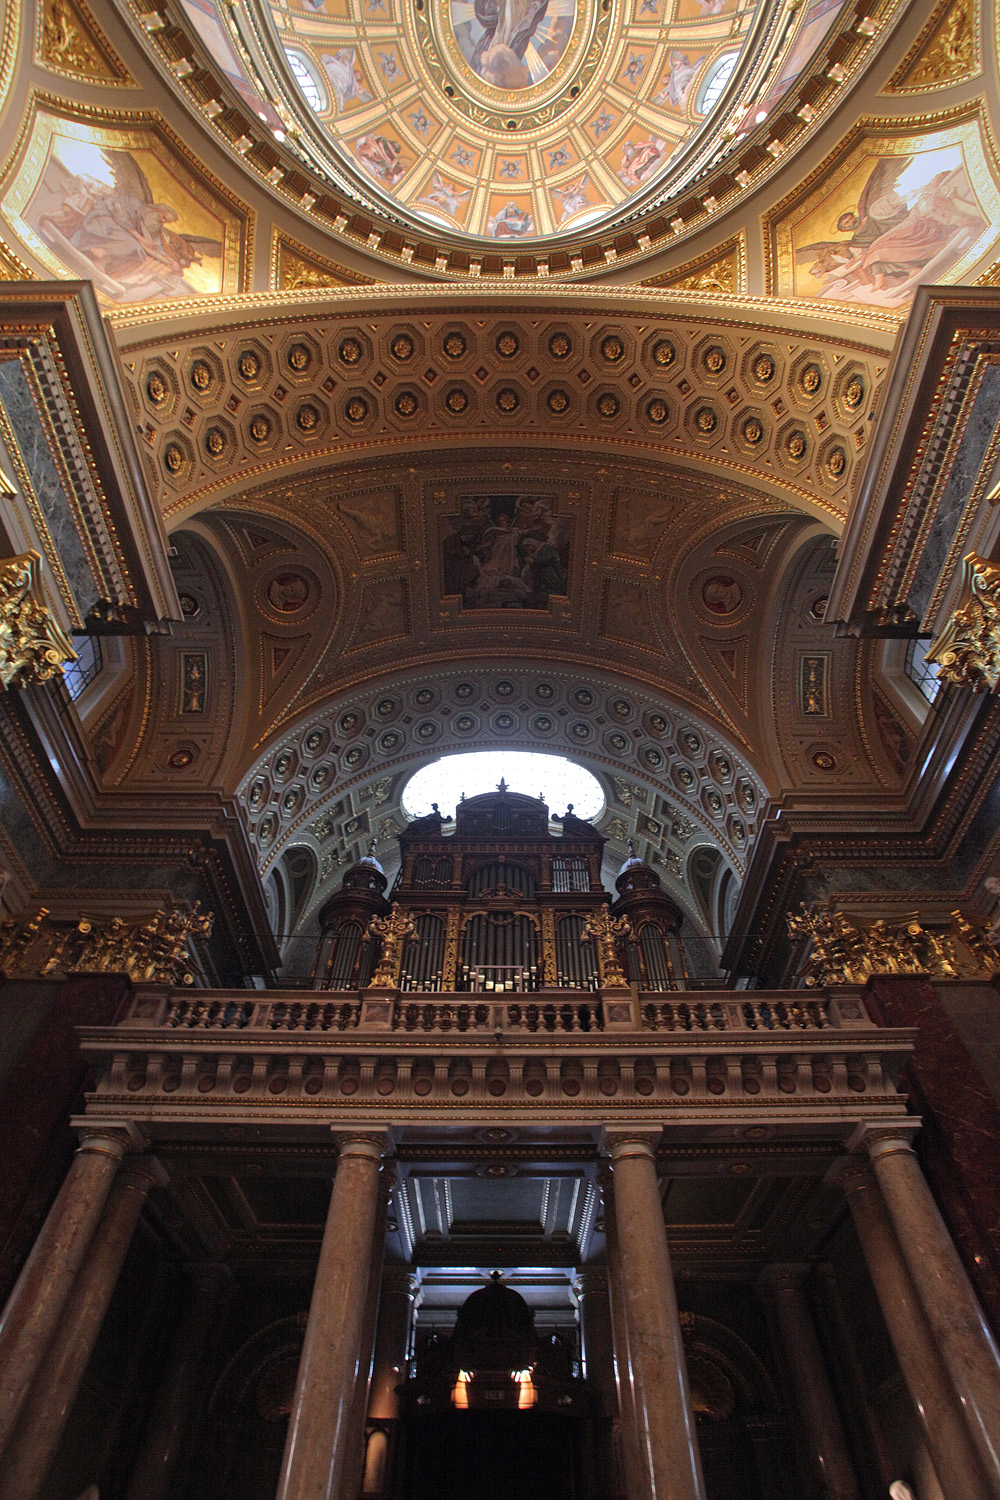 bill-hocker-organ-loft-st-stephen's-basilica-budapest-hungary-2013